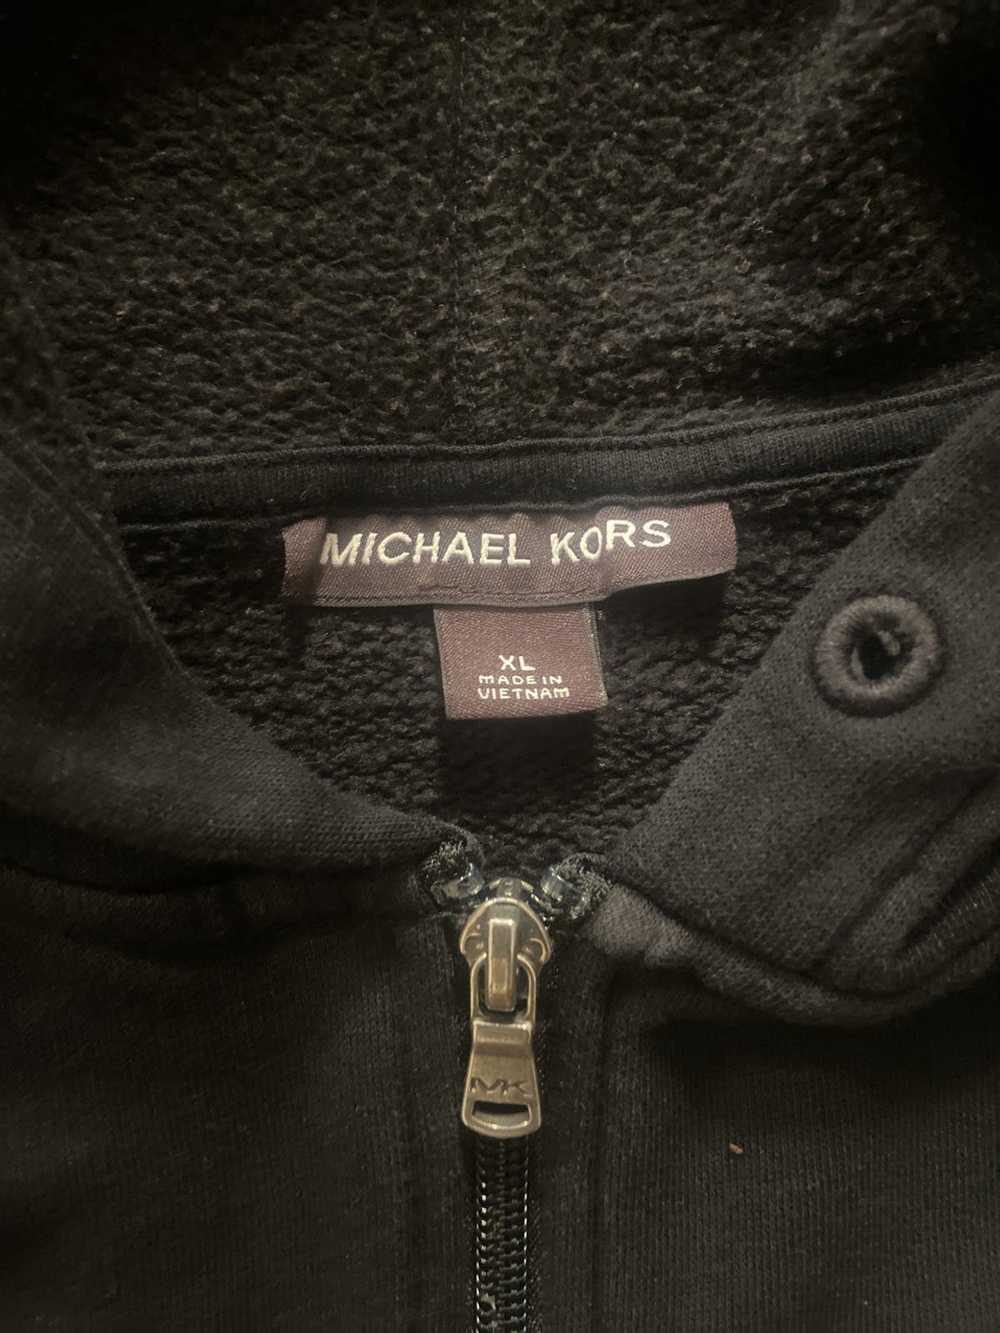 Michael Kors Micheal Kors Black and White Zip Up - image 3